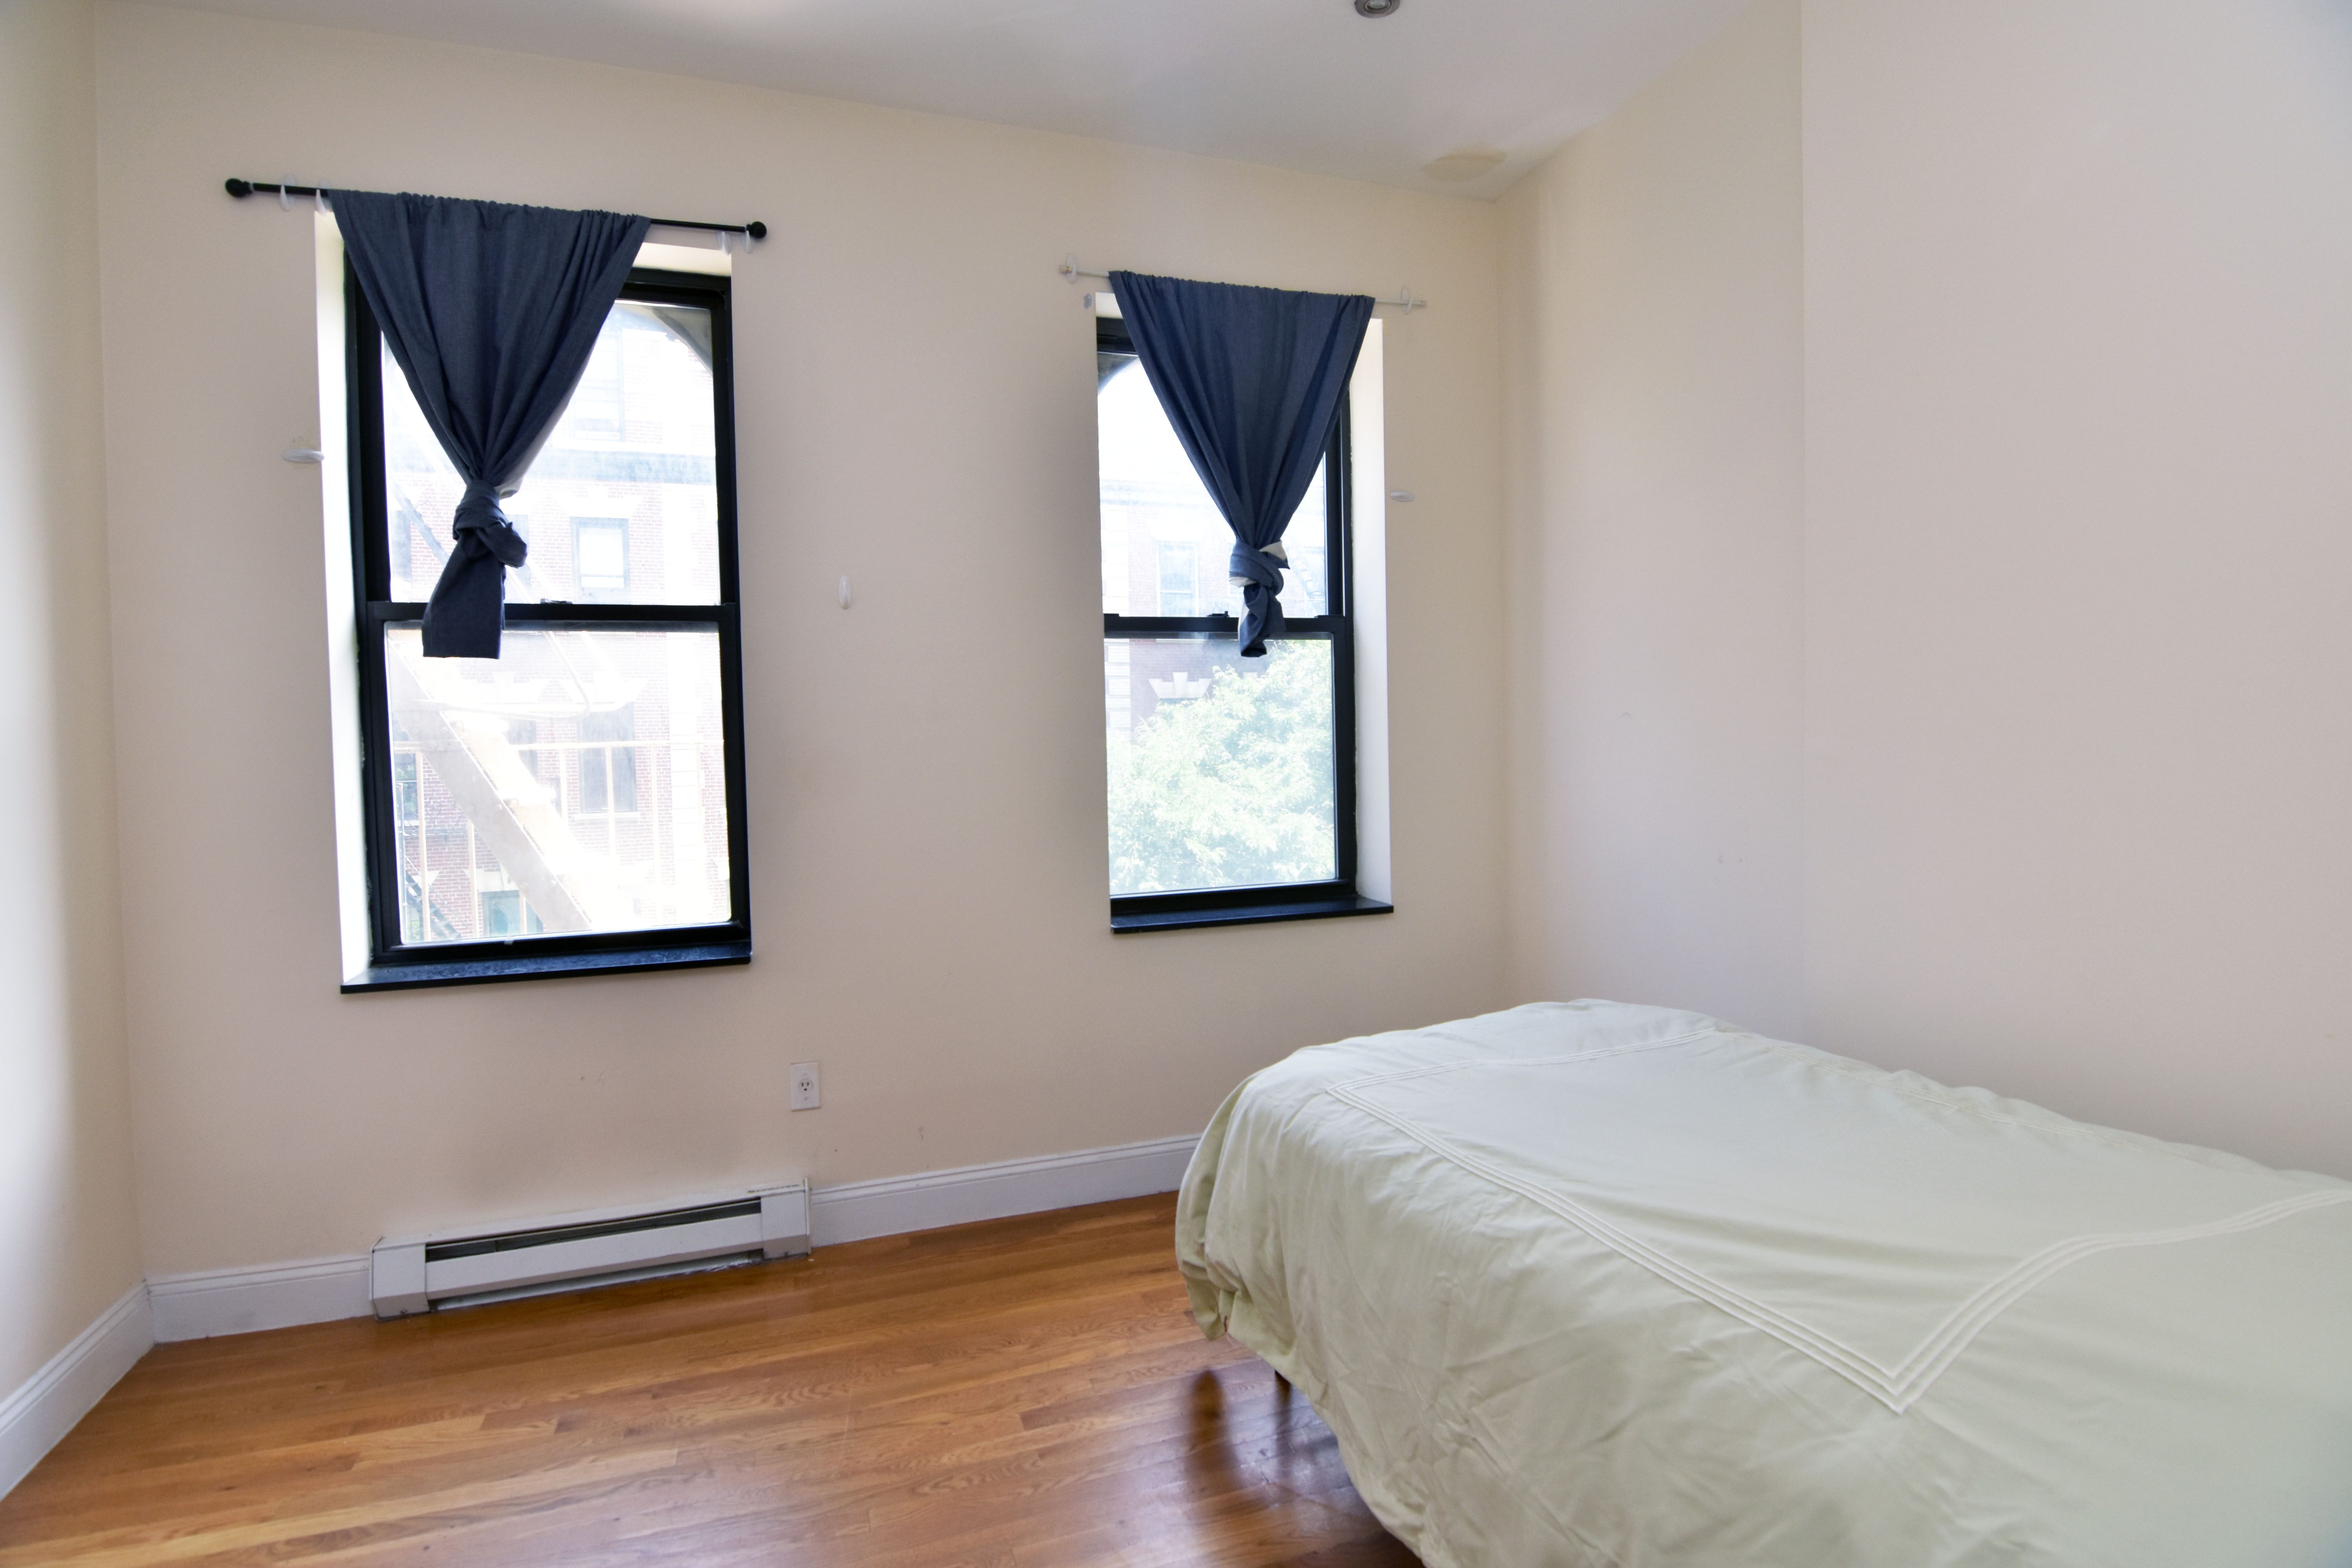 216 West 108th Street 3-R, Manhattan Valley, Upper Manhattan, NYC - 3 Bedrooms  
1 Bathrooms  
5 Rooms - 